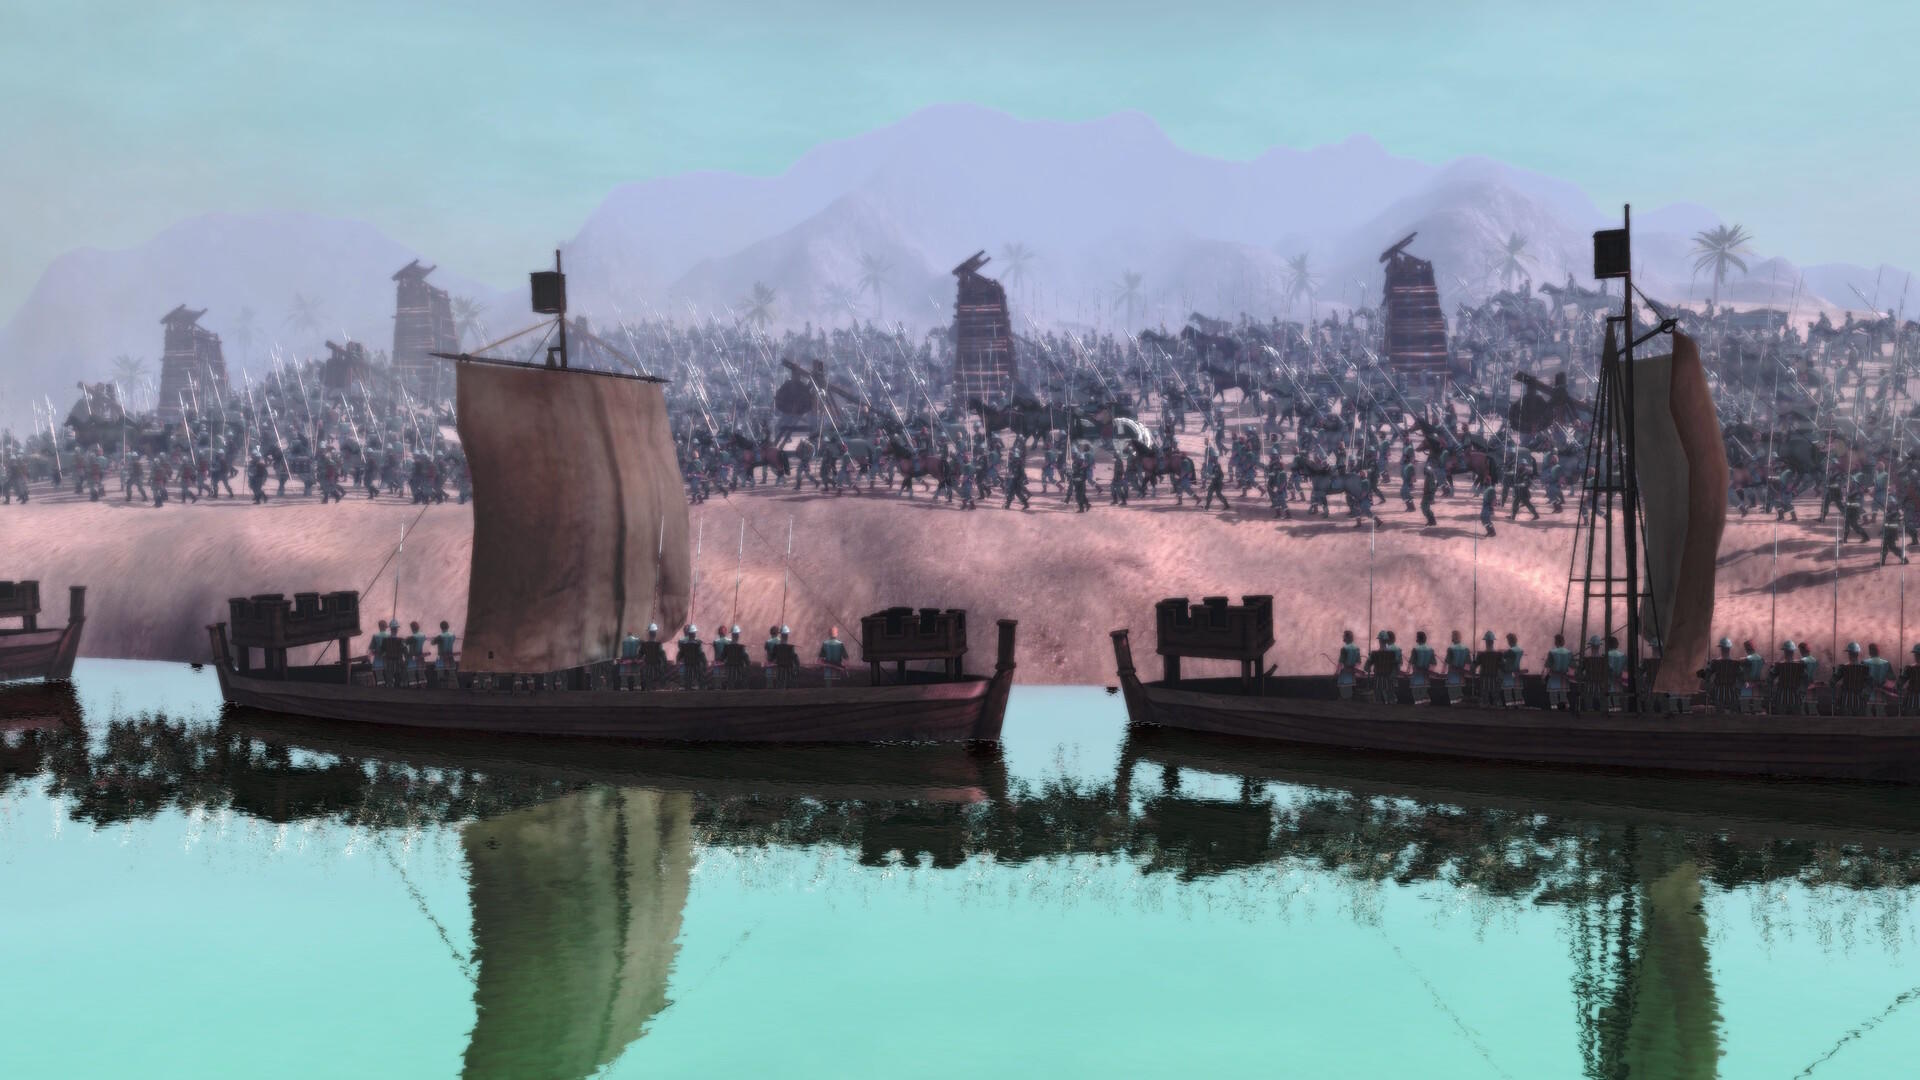 Renaissance Kingdom Wars screenshot game